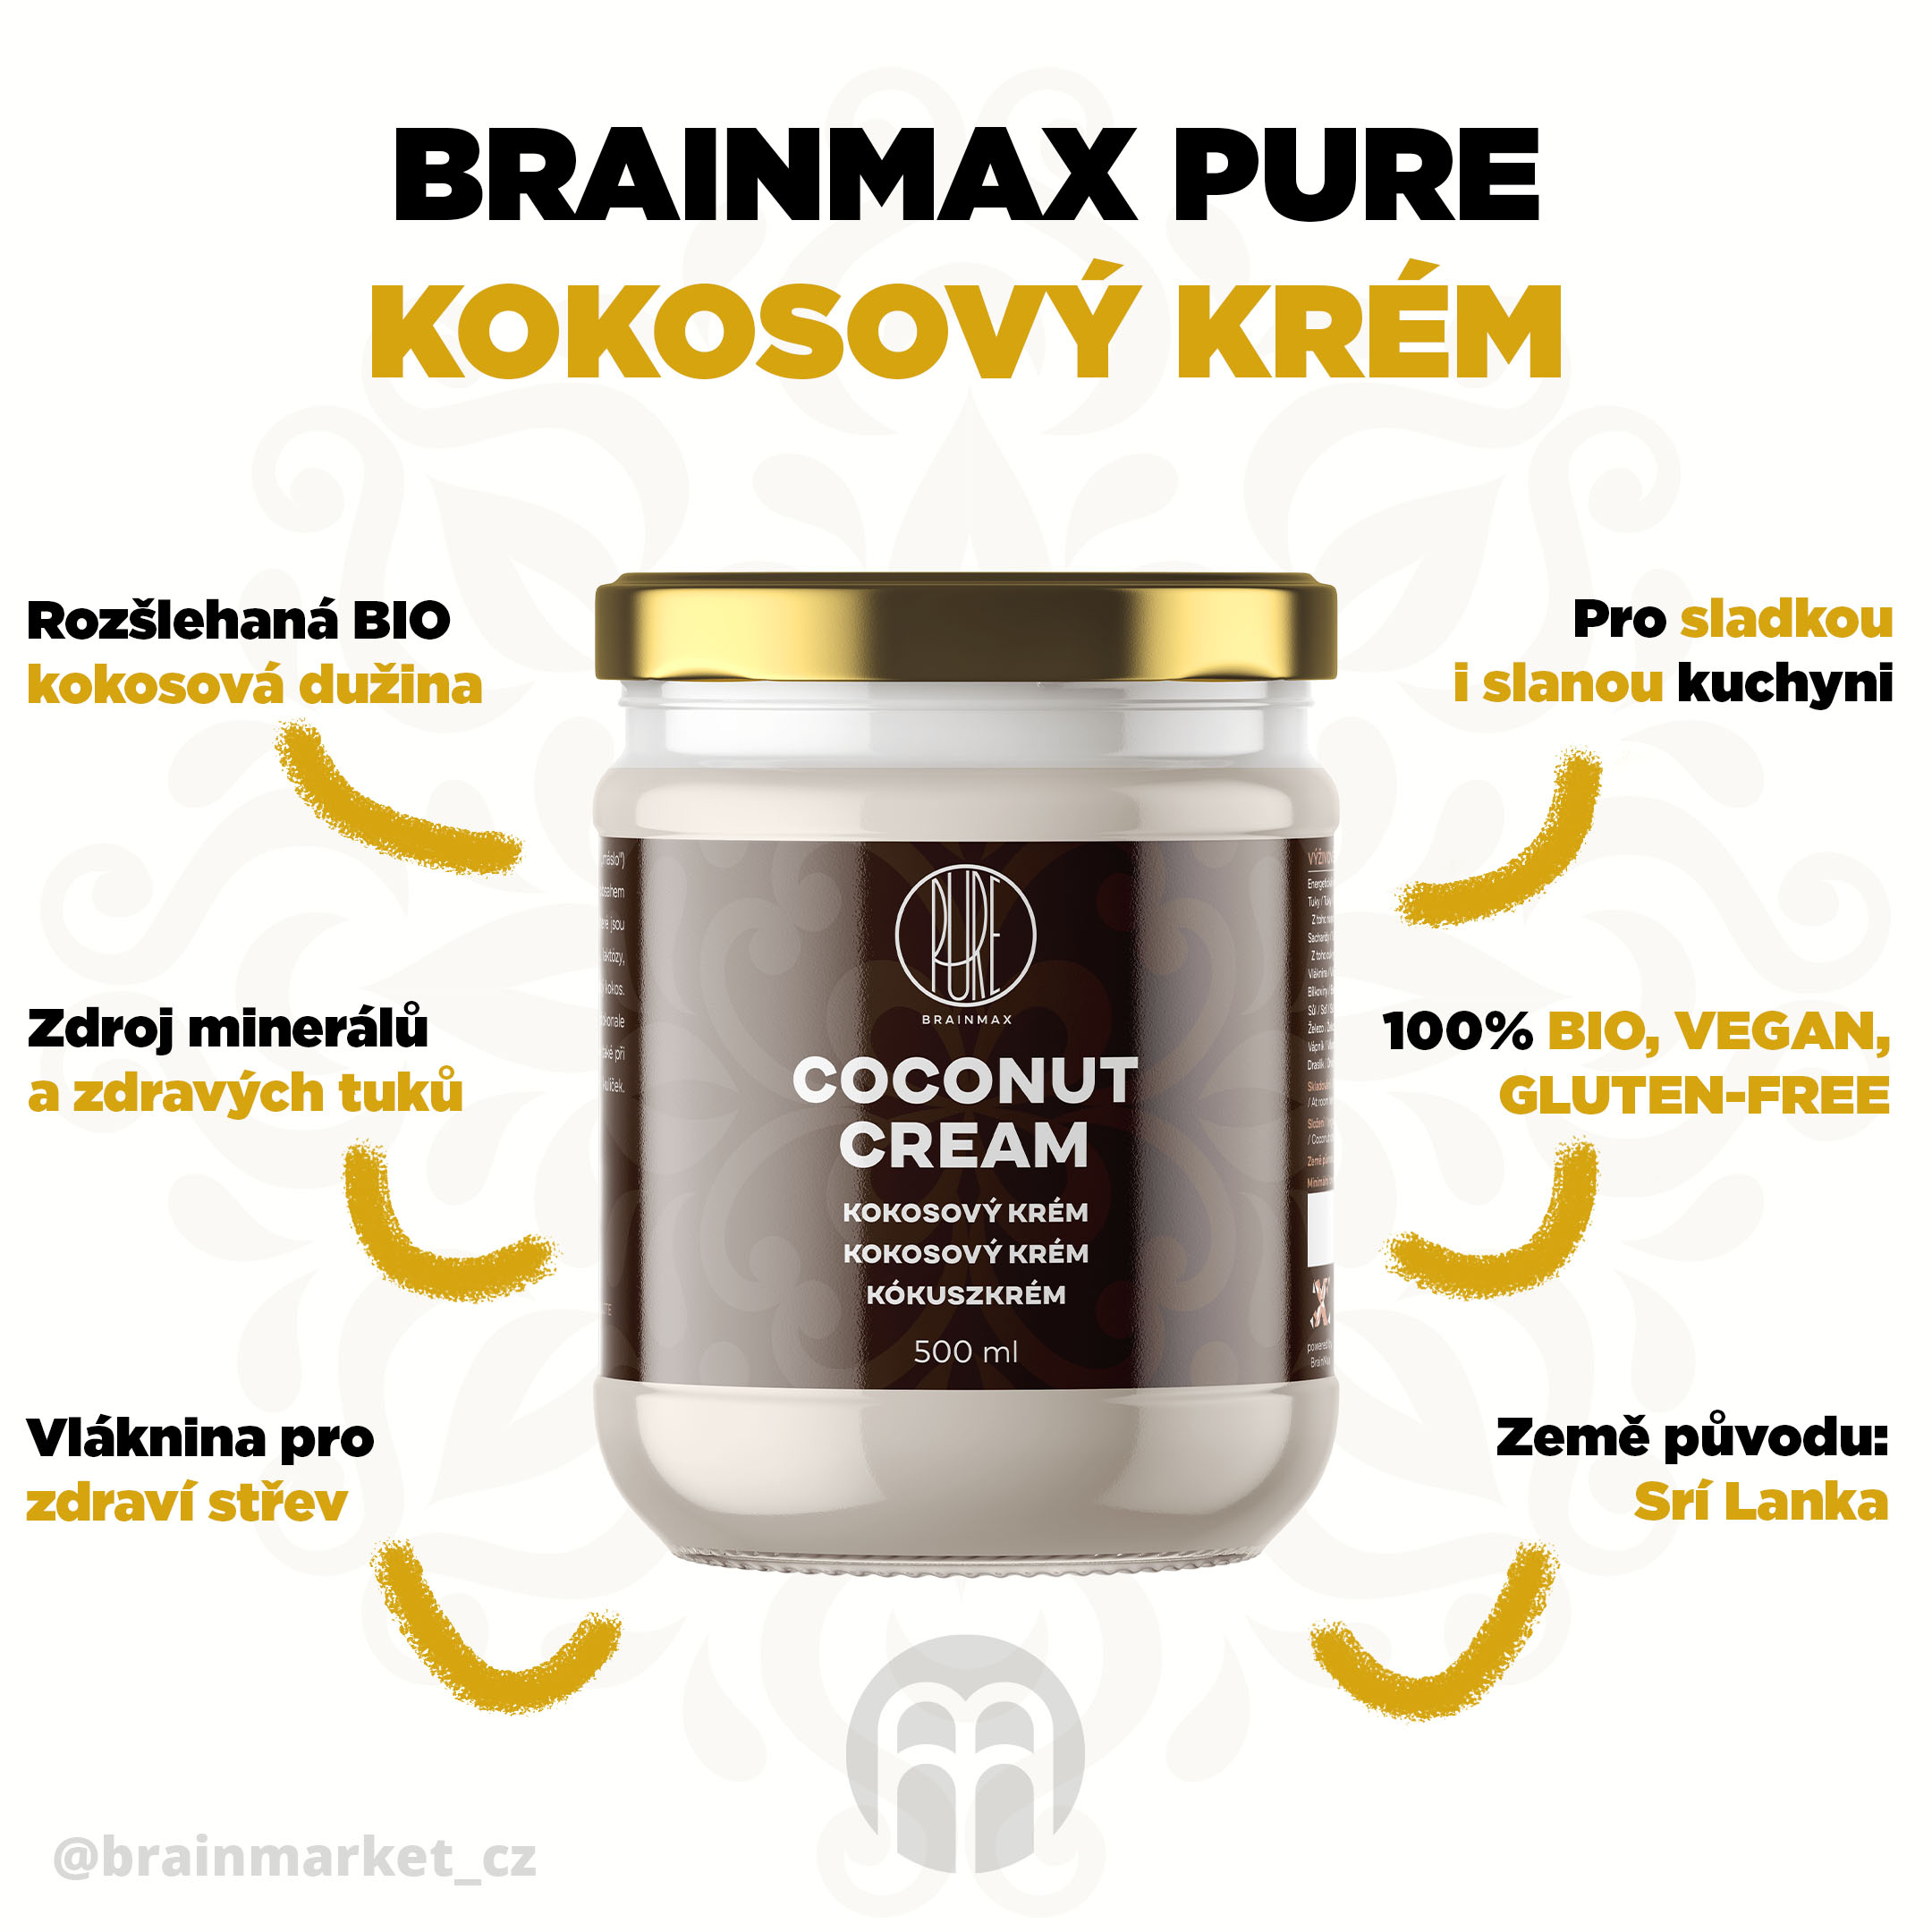 brainmax pure kokos krem infografika brainmarket CZ